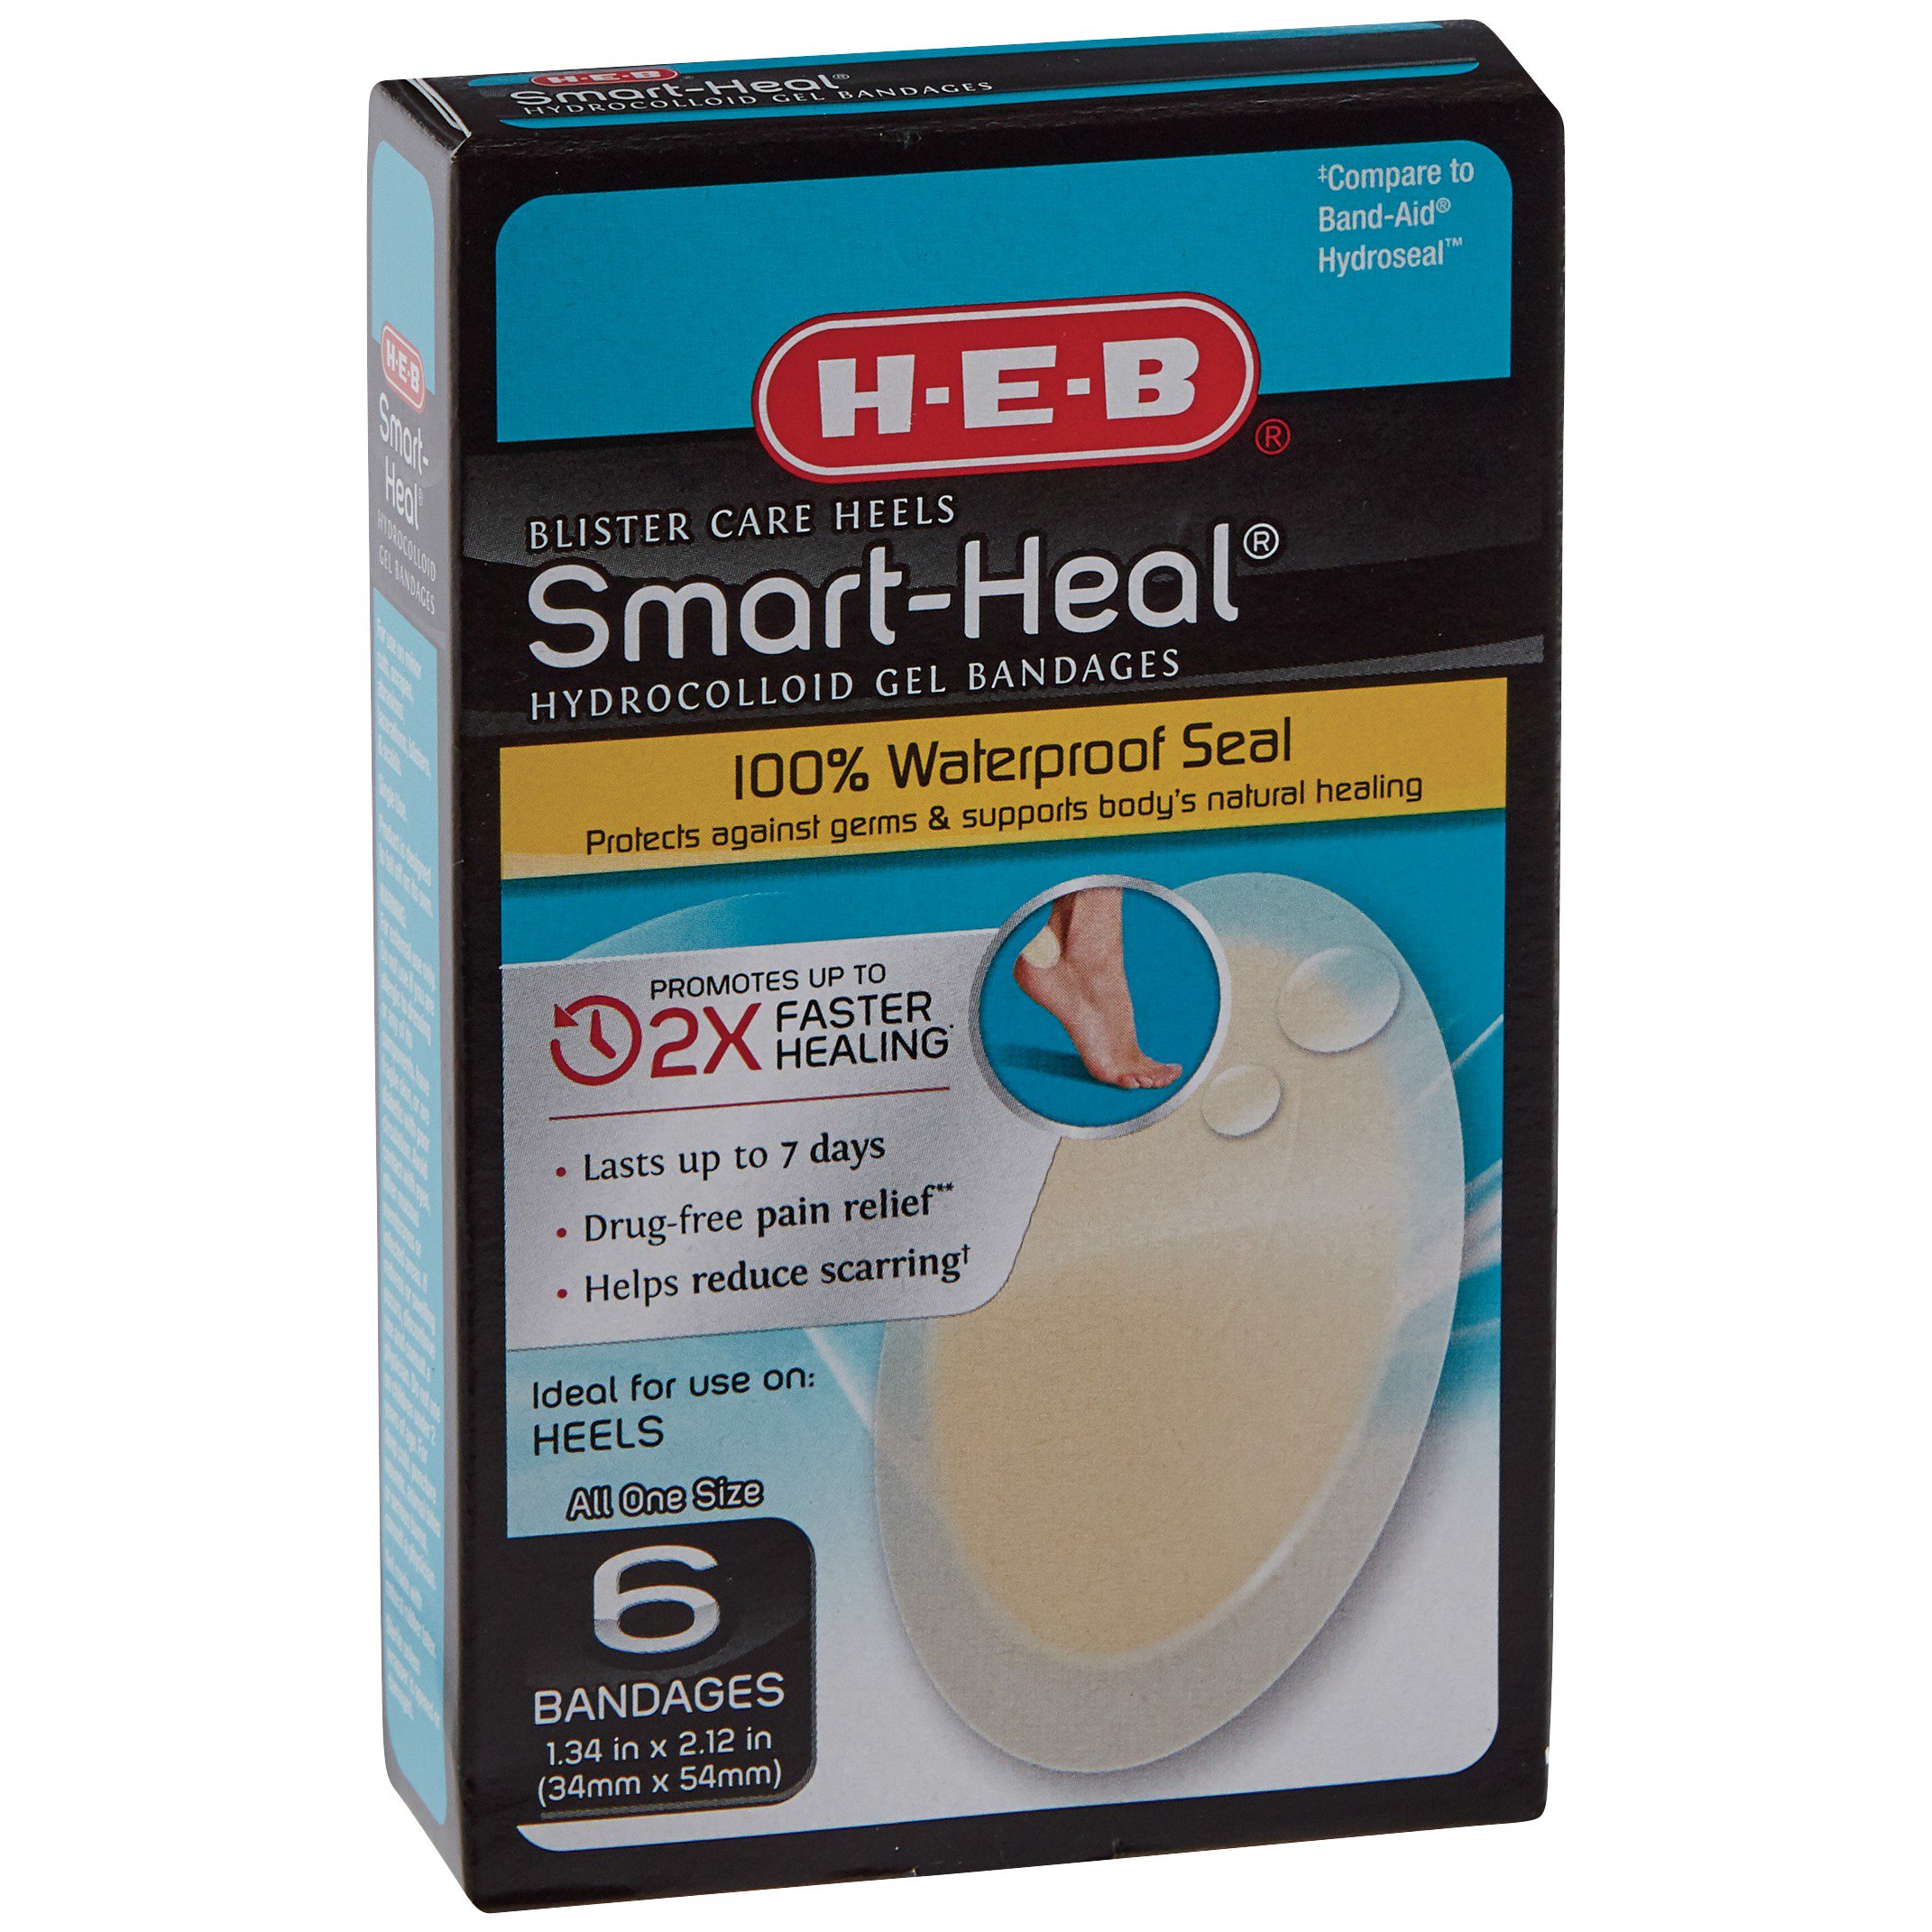 H-E-B Blister Care Smart Hydrocolloid Gel Bandages Shop Medicines & Treatments H-E-B